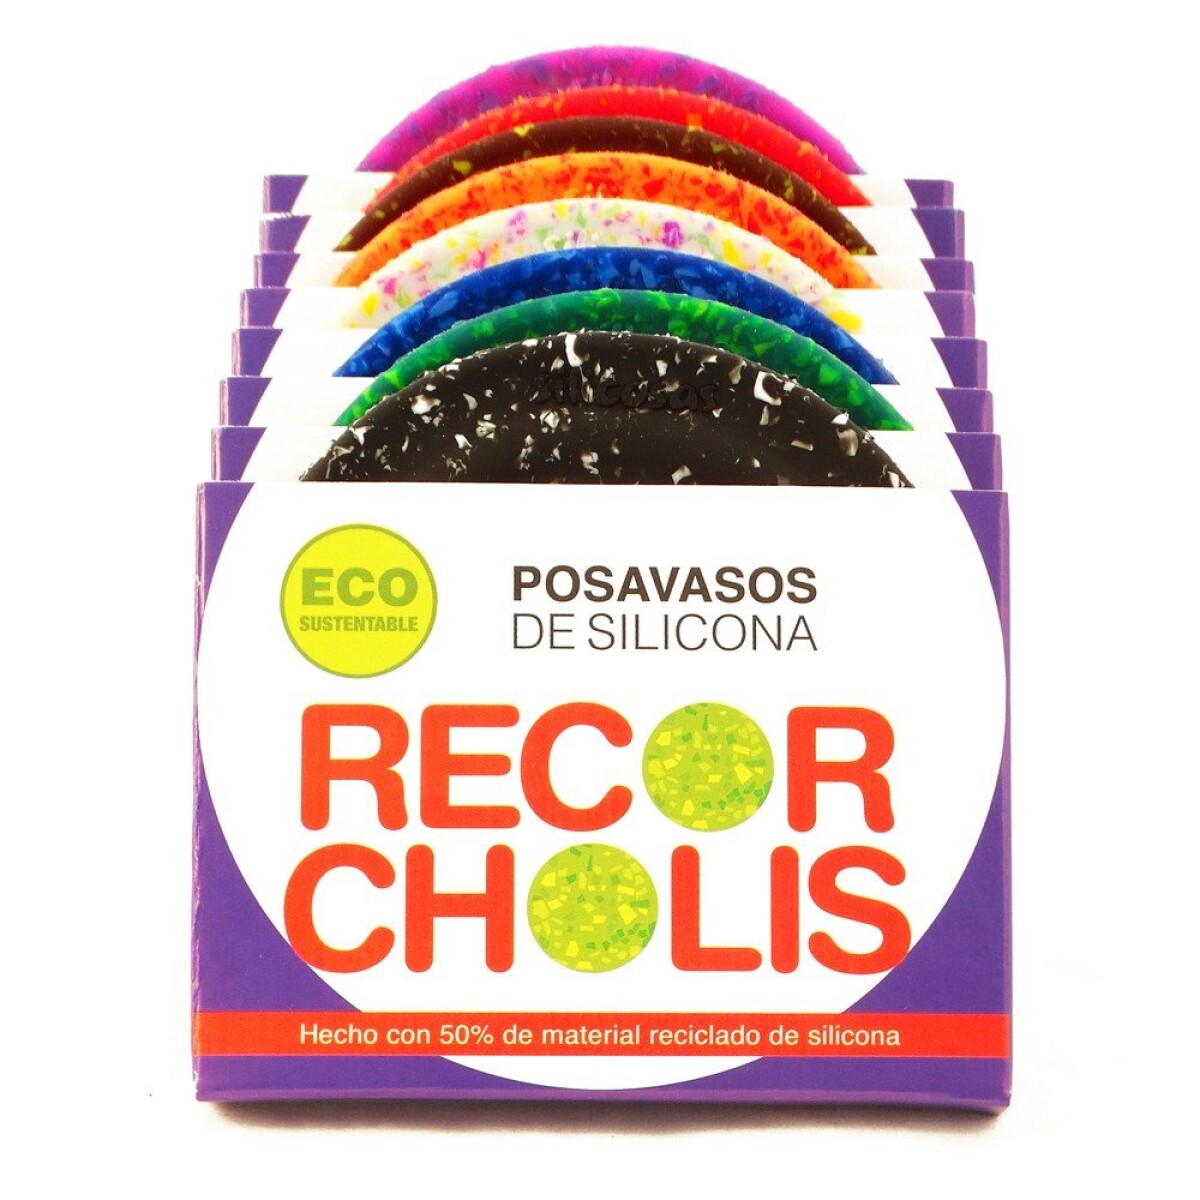 PosaVasos Silicosas Recorcholis x 4 unidades. - 000 